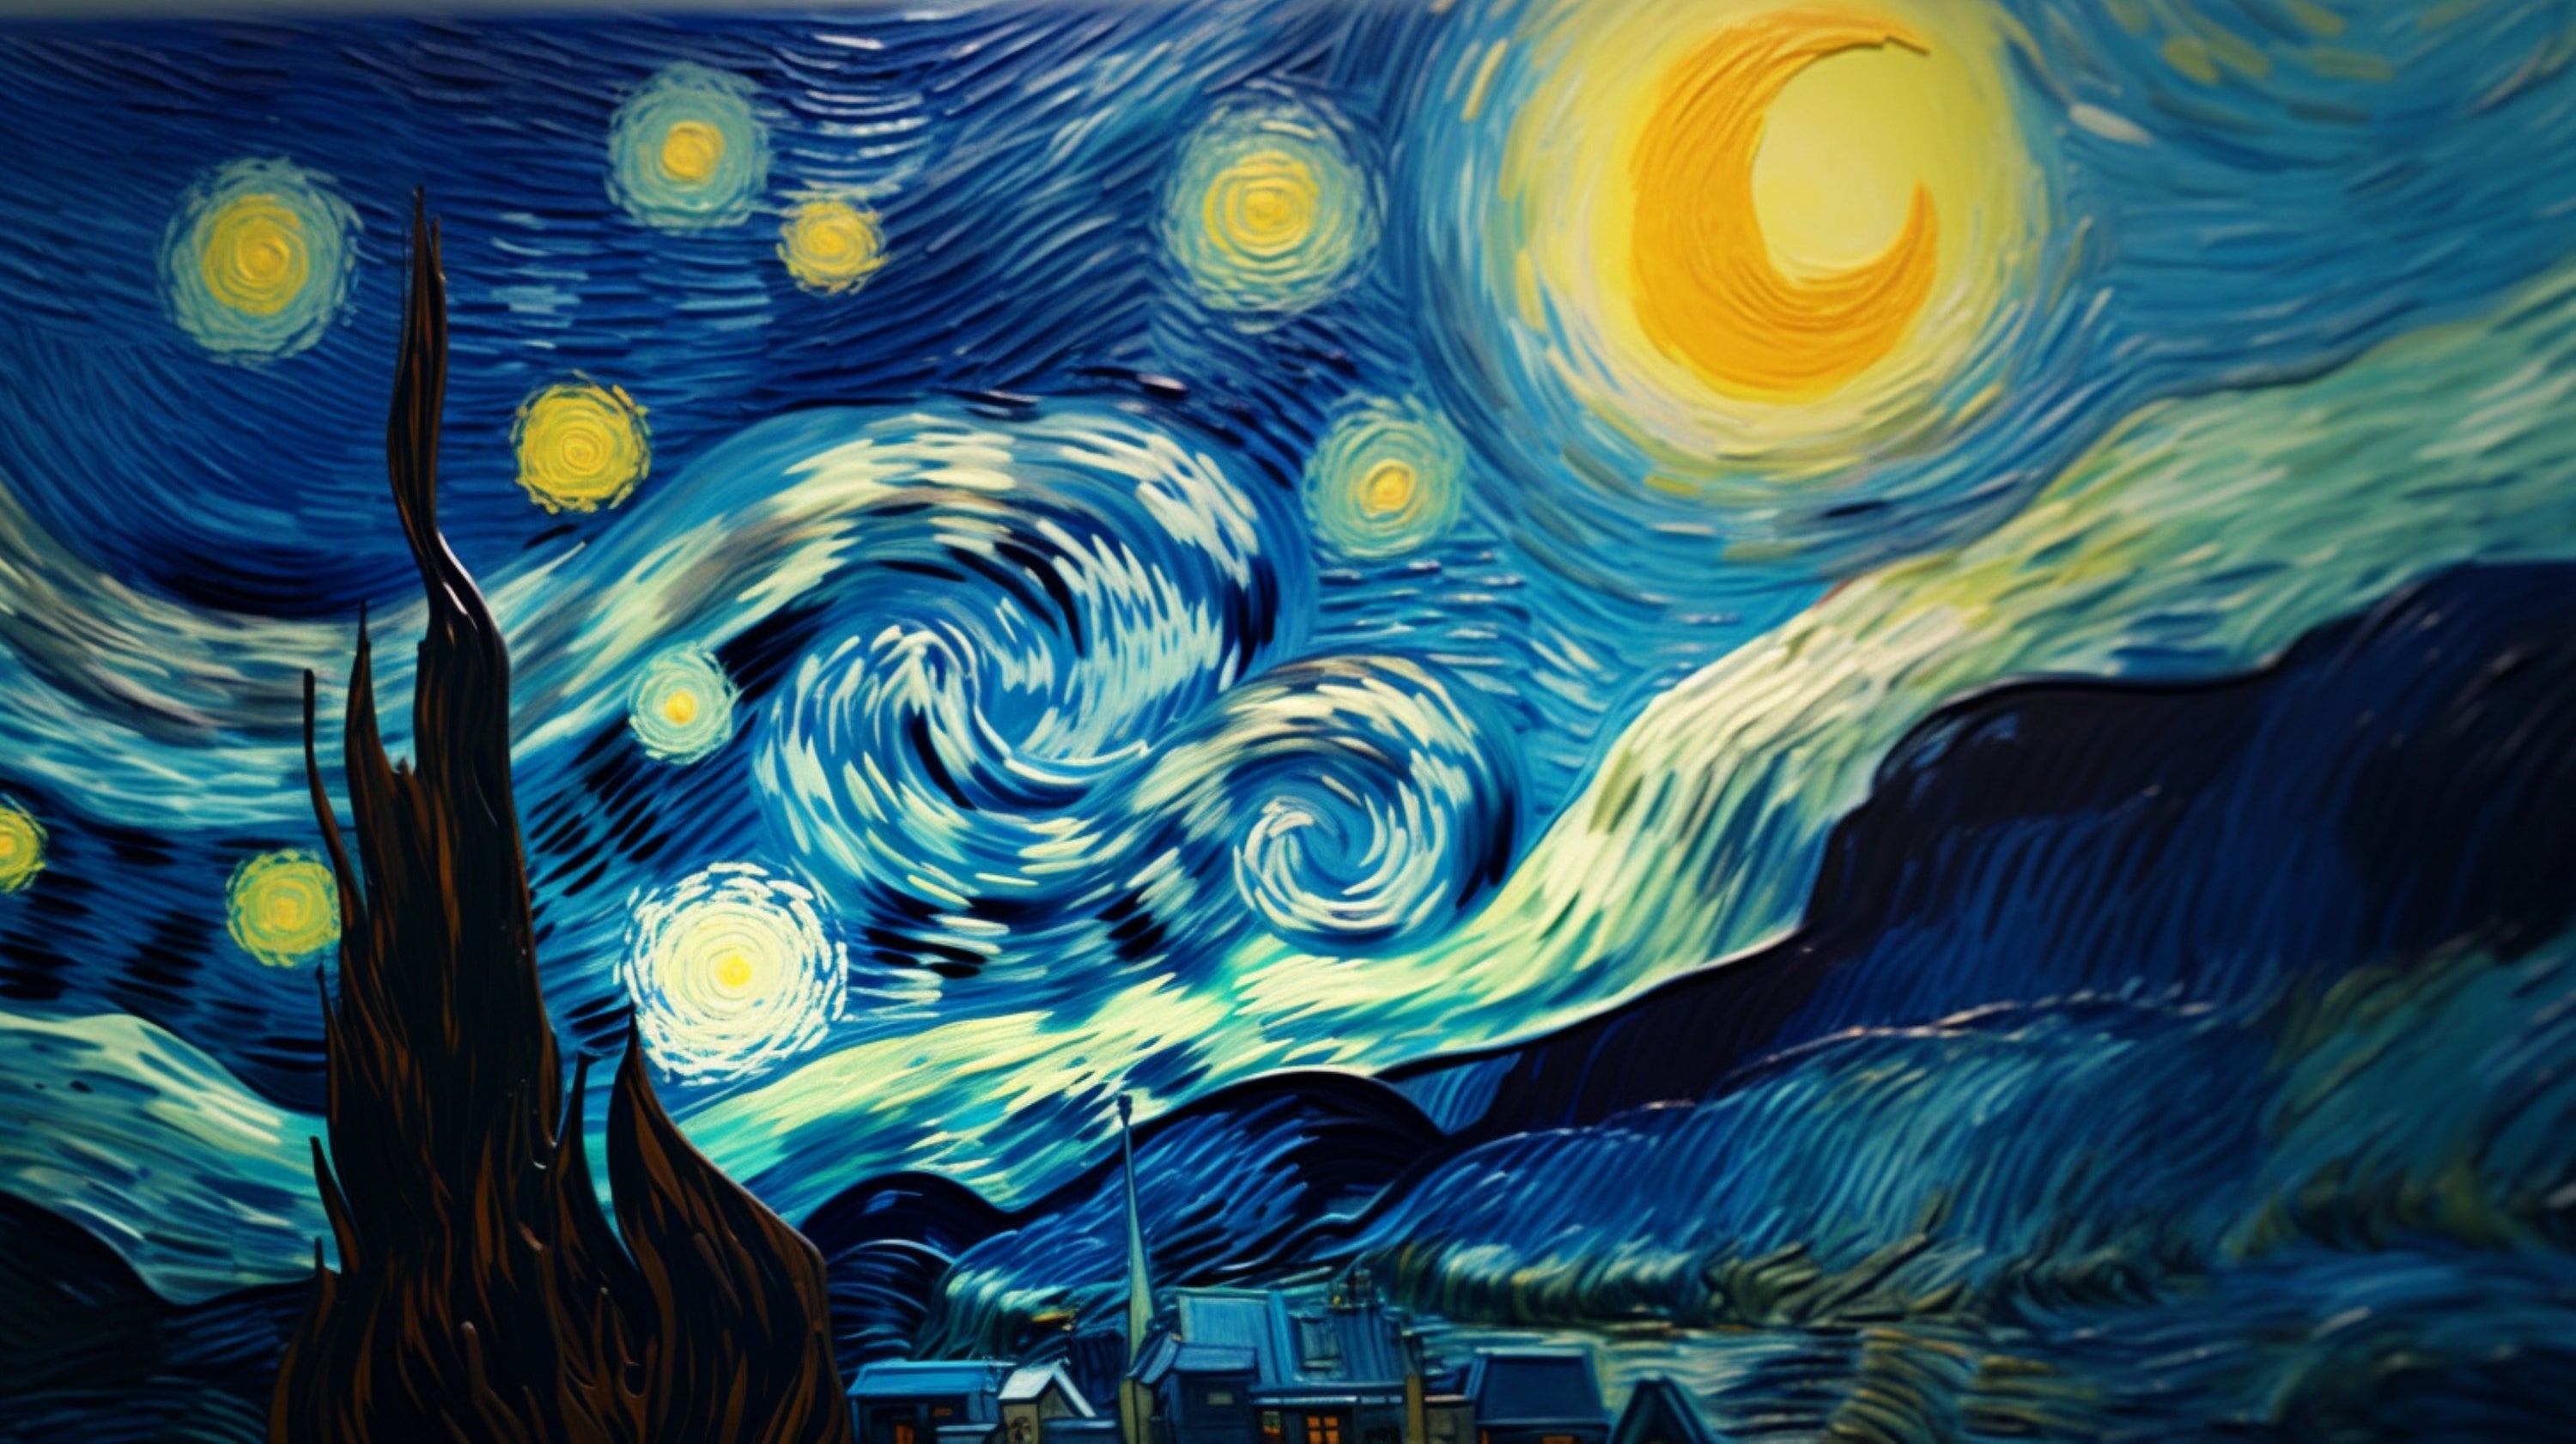 Van Gogh art of moon and blue skies and swirls